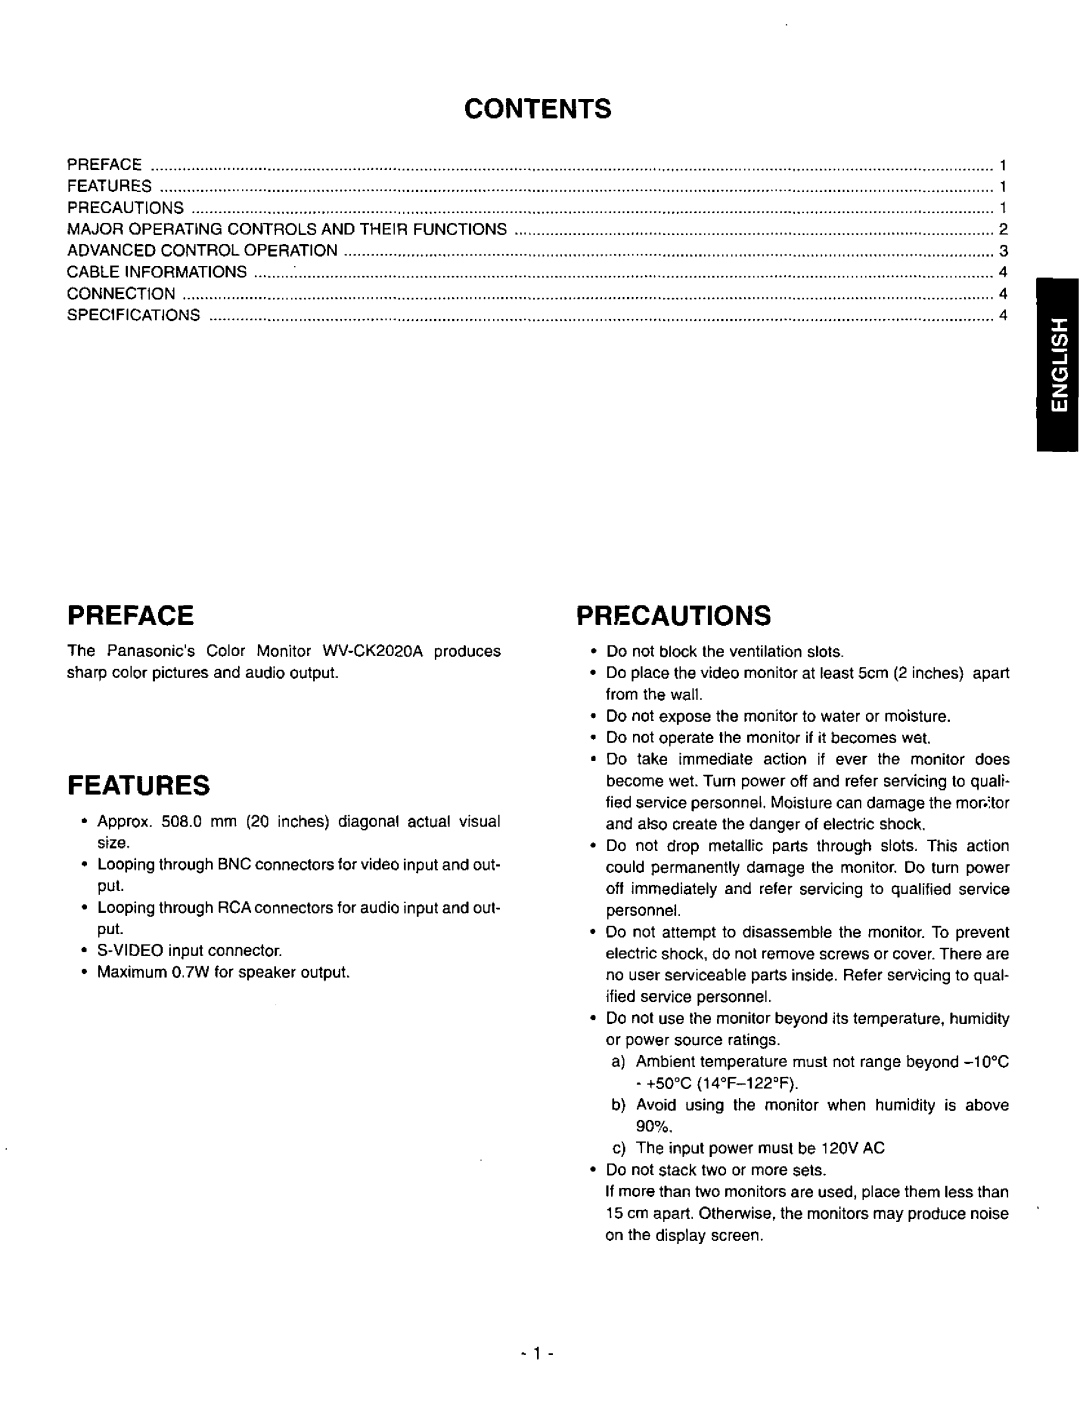 Panasonic WV-CK2020A manual 